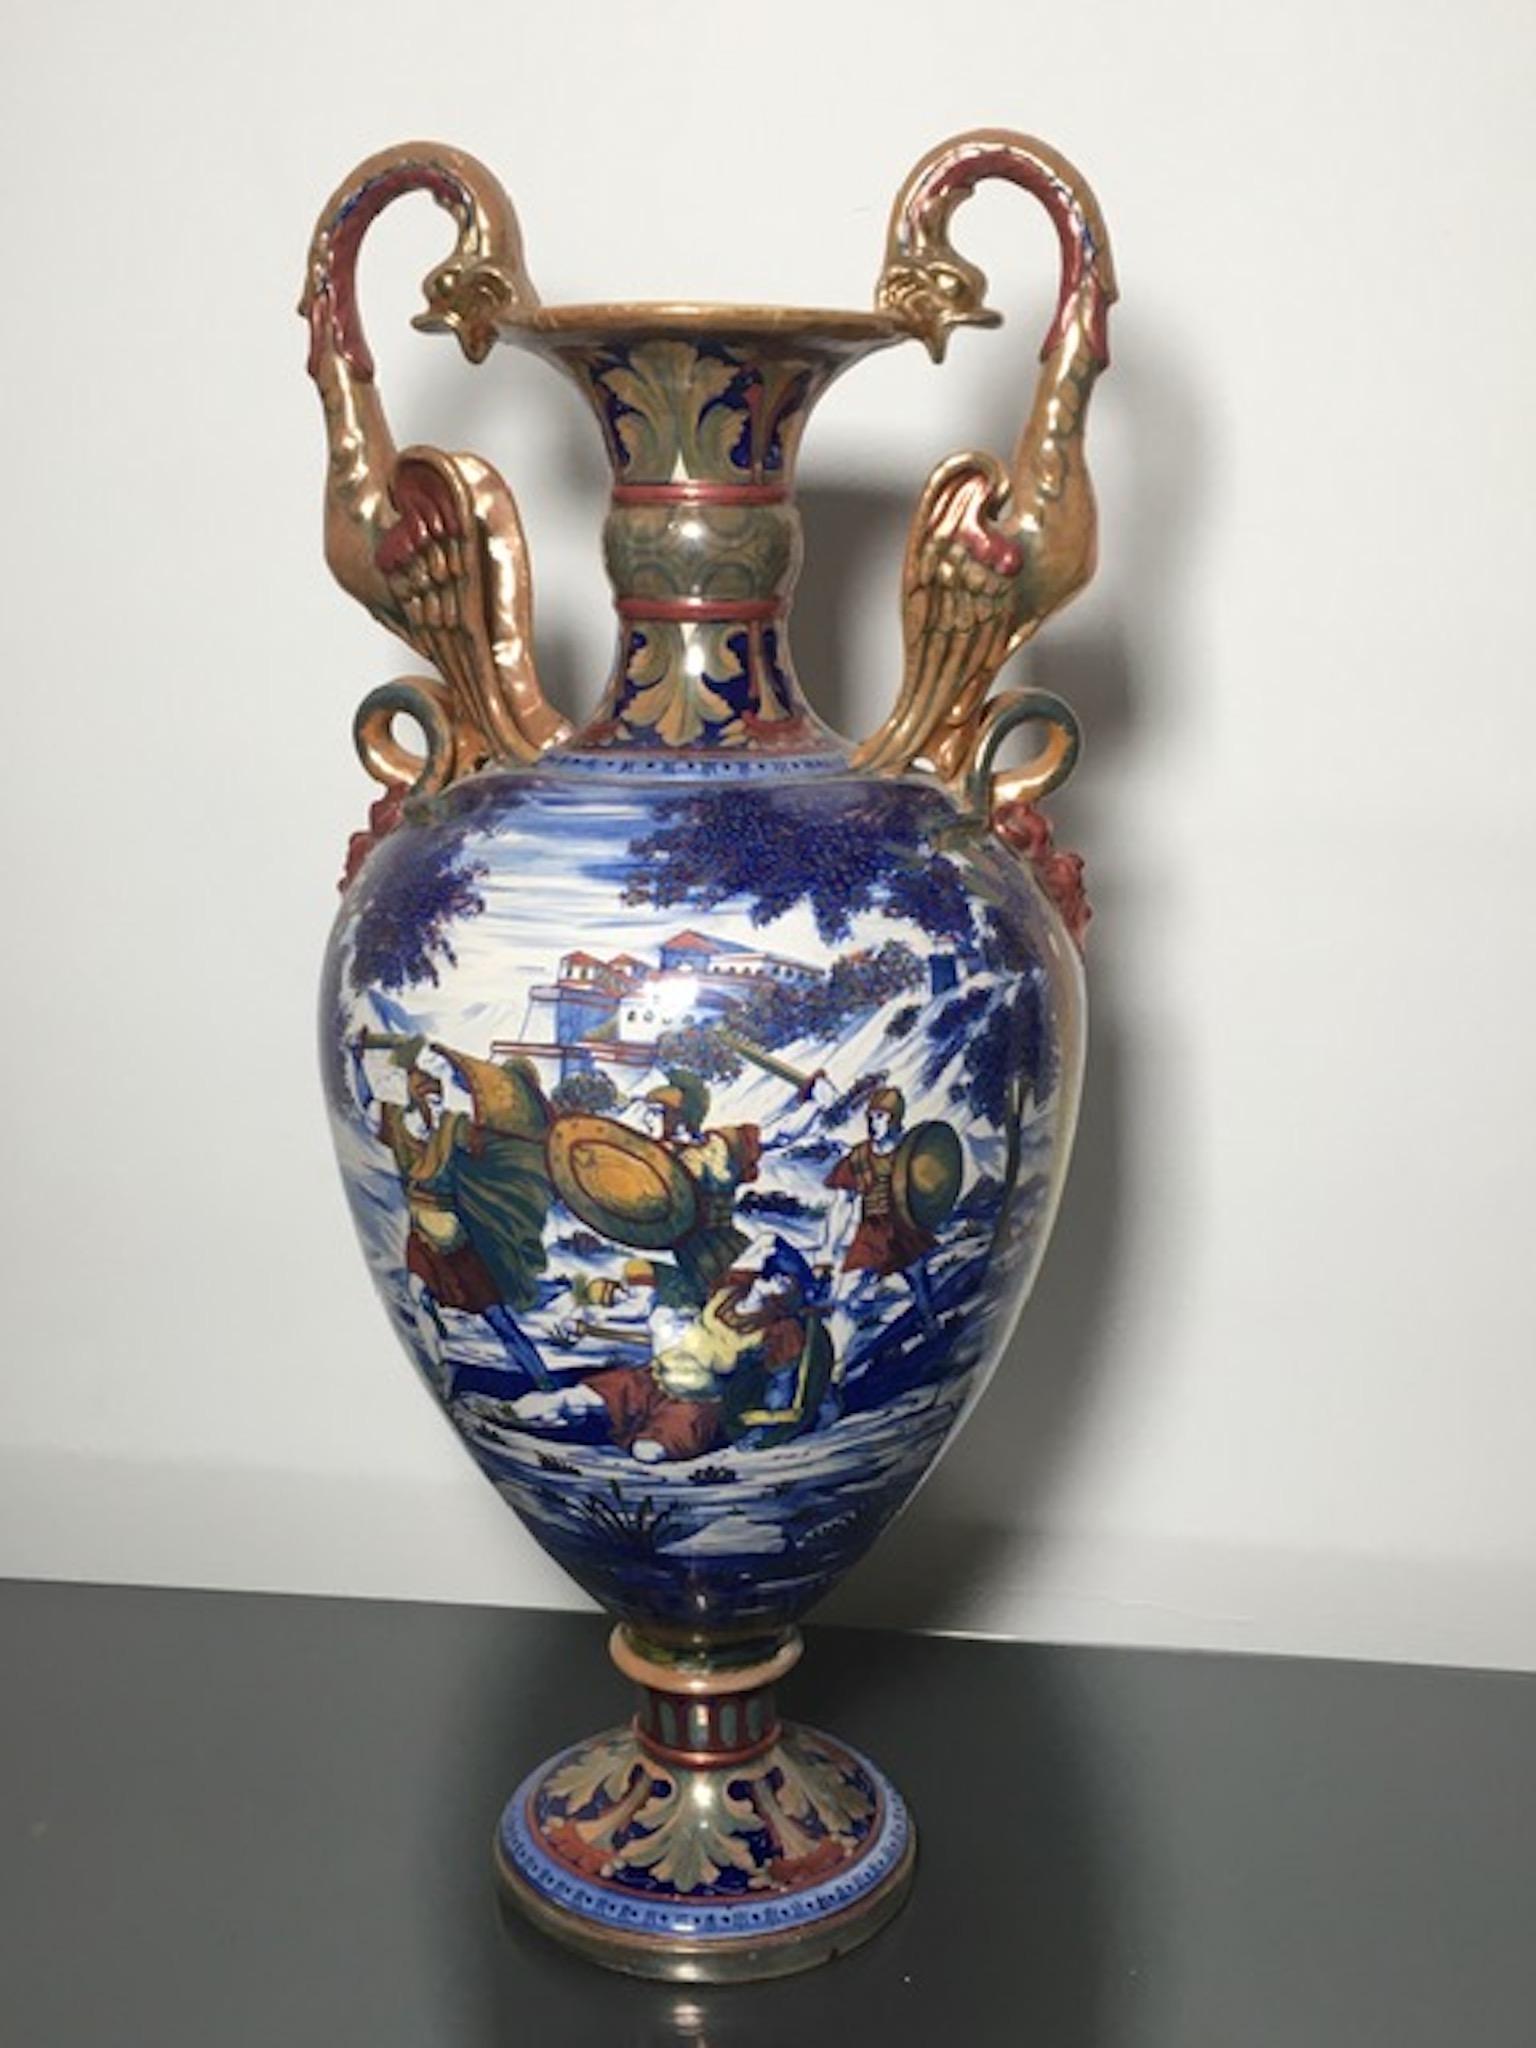 Renaissance Gualdo Tadino Big Ceramic Vase